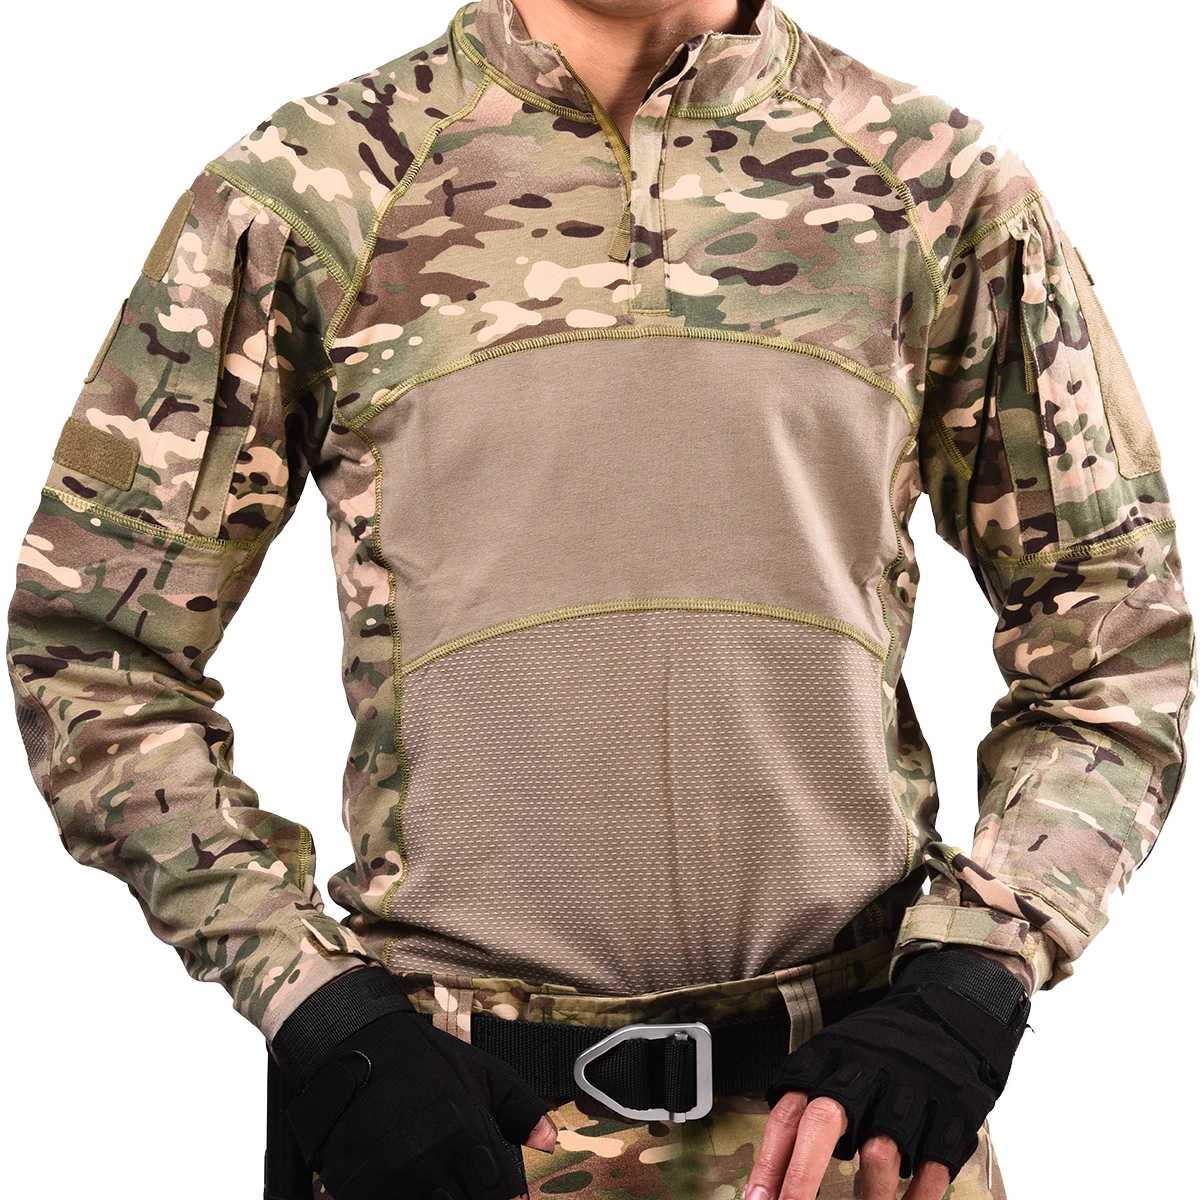 Mens Army Tactical Multicam Military Combat T-Shirt Long Shirt CP Camo Scouting Uniforms Airsoft Shirts Camping Hunting Clothing